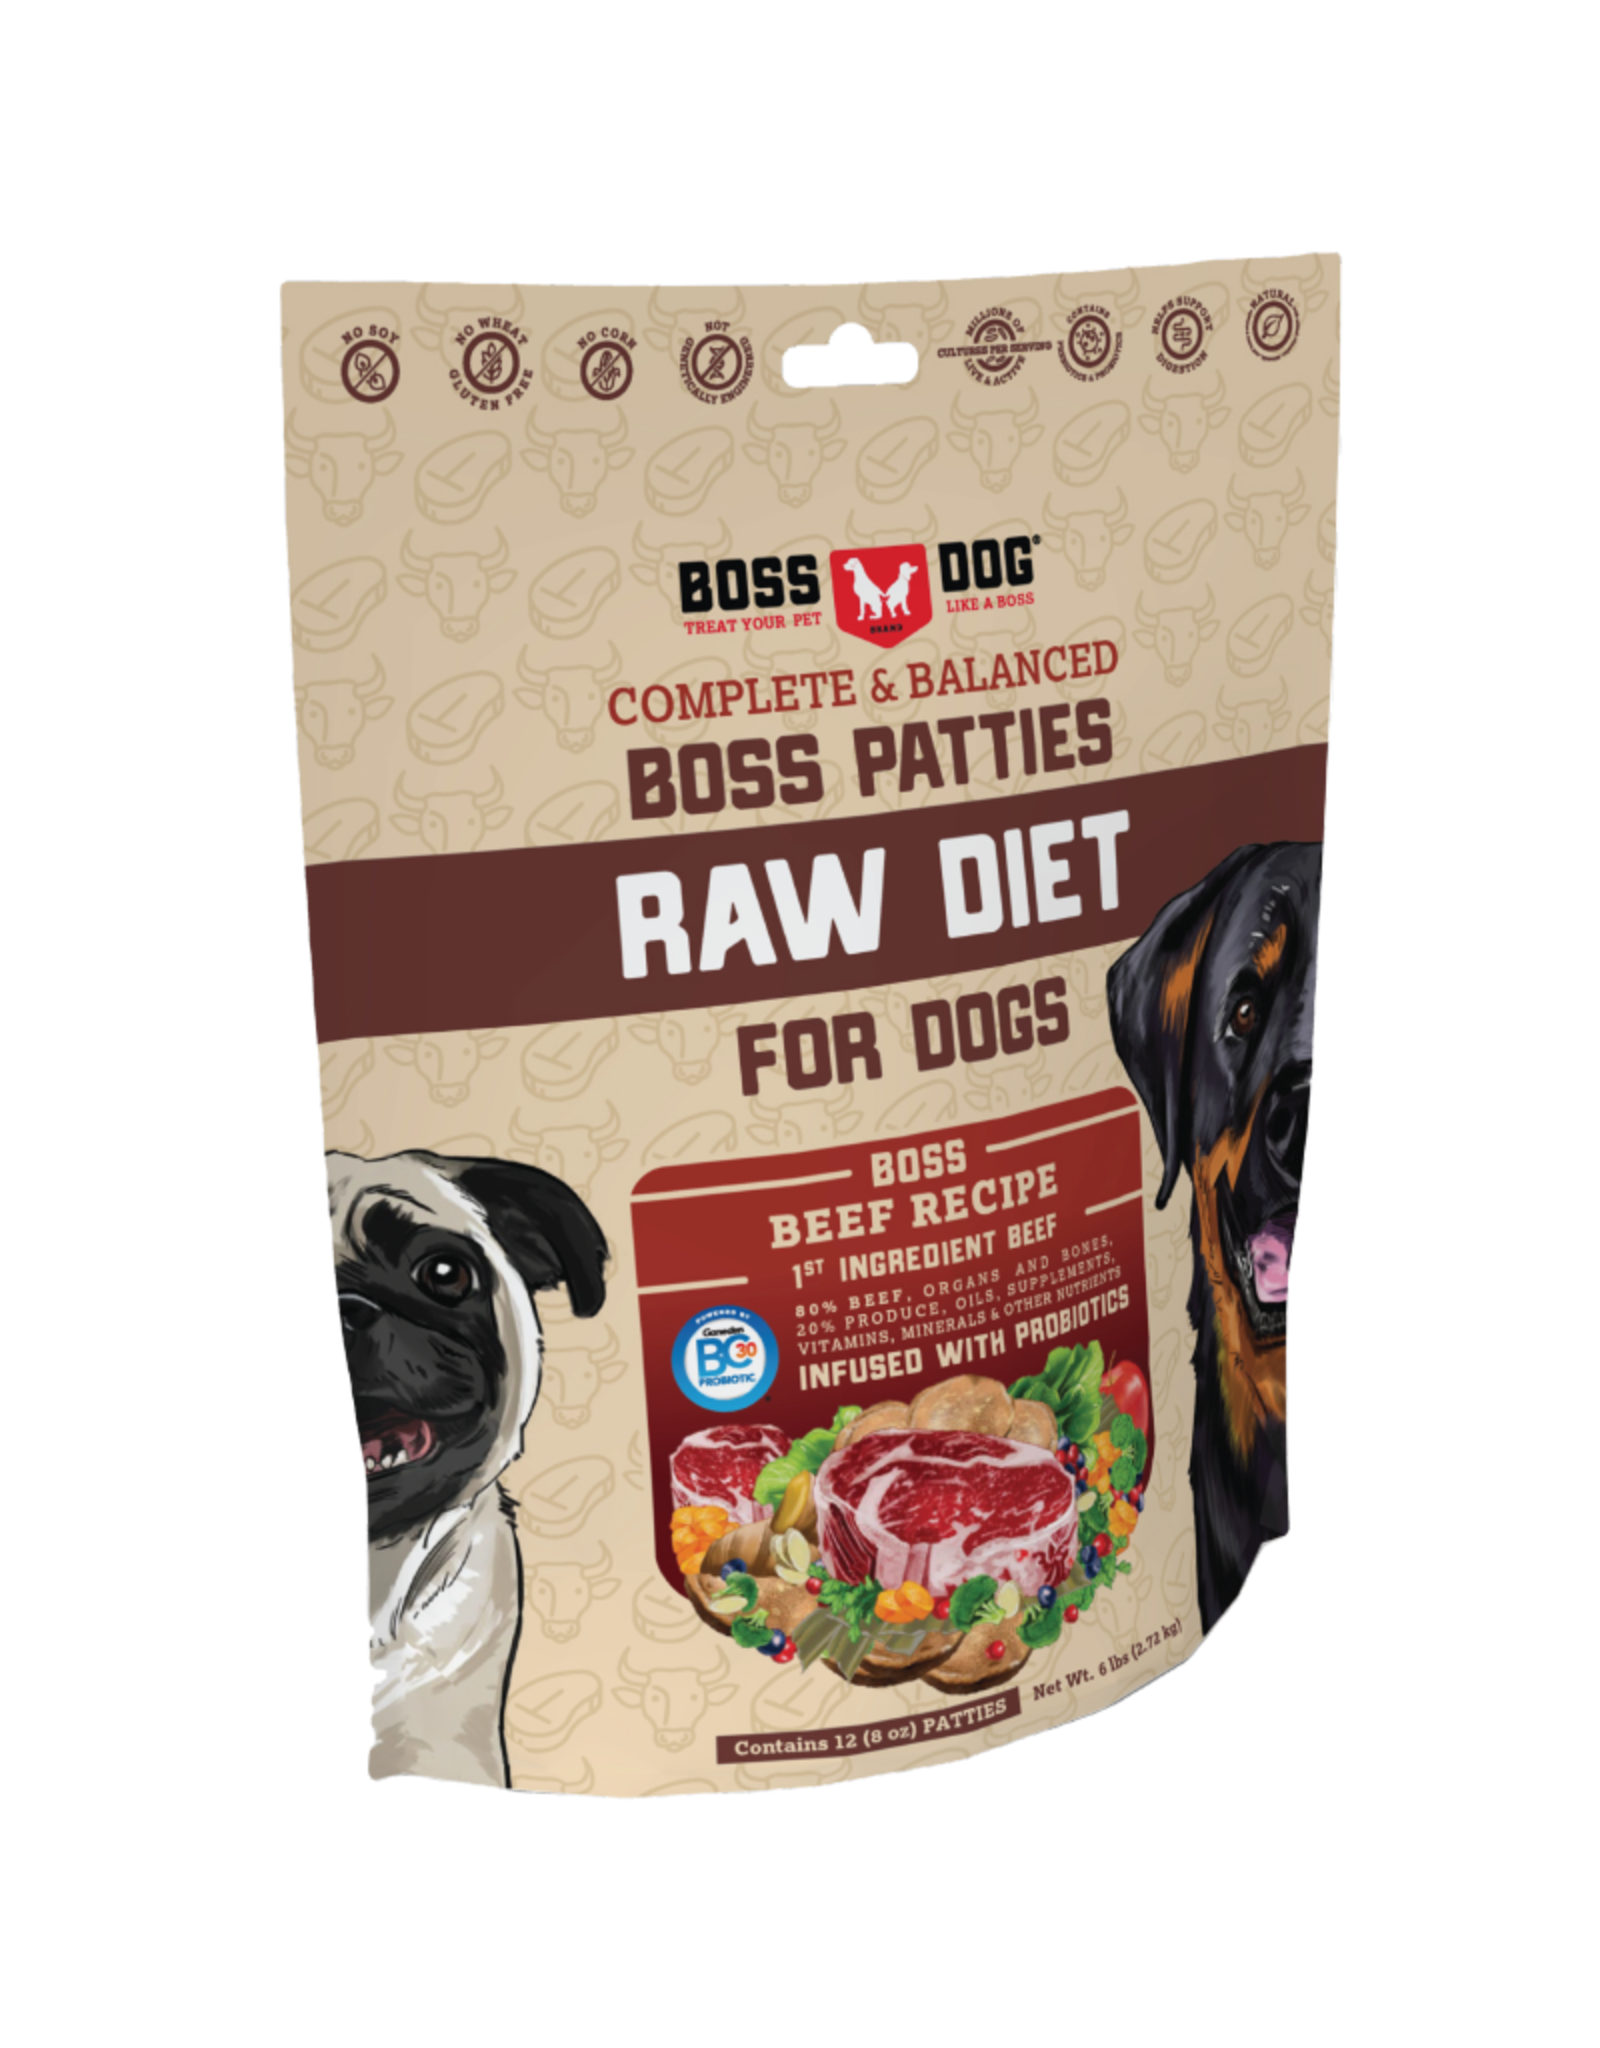 BossDog Boss Dog Raw Beef Patty 6lb